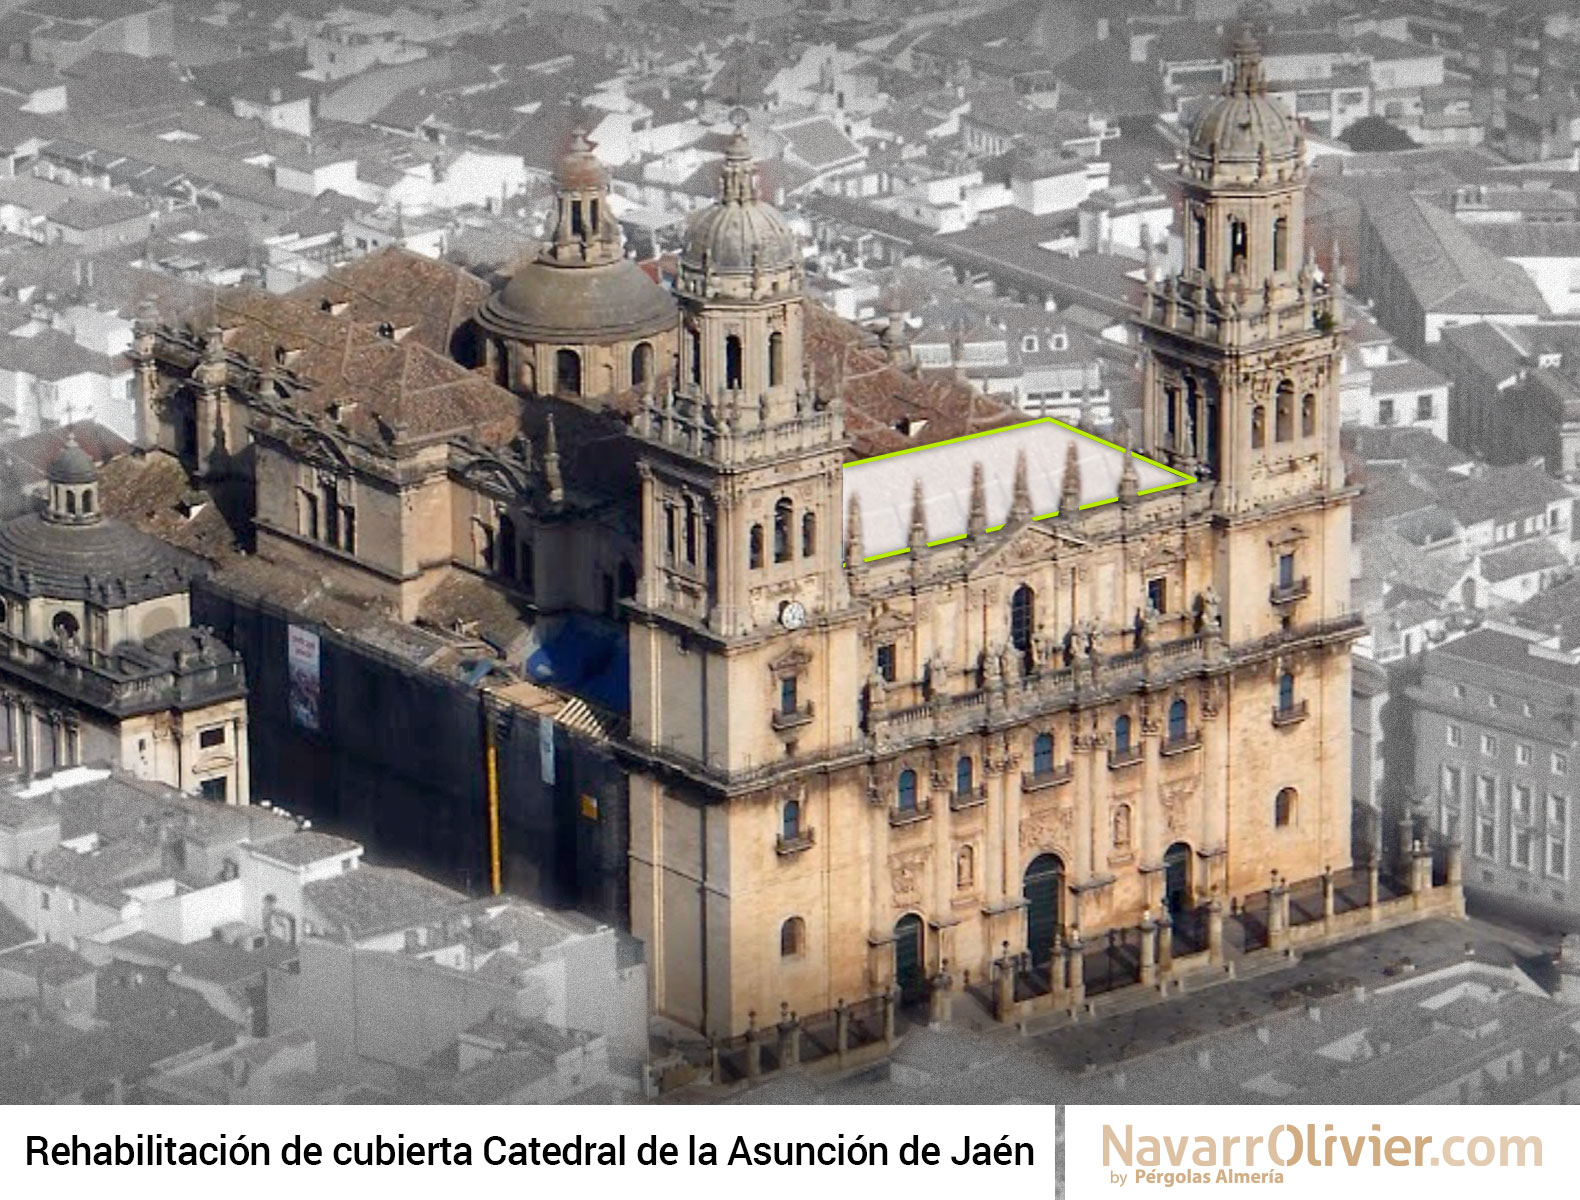 Plano cubierta a rehabilitar Catedral de Jaéb